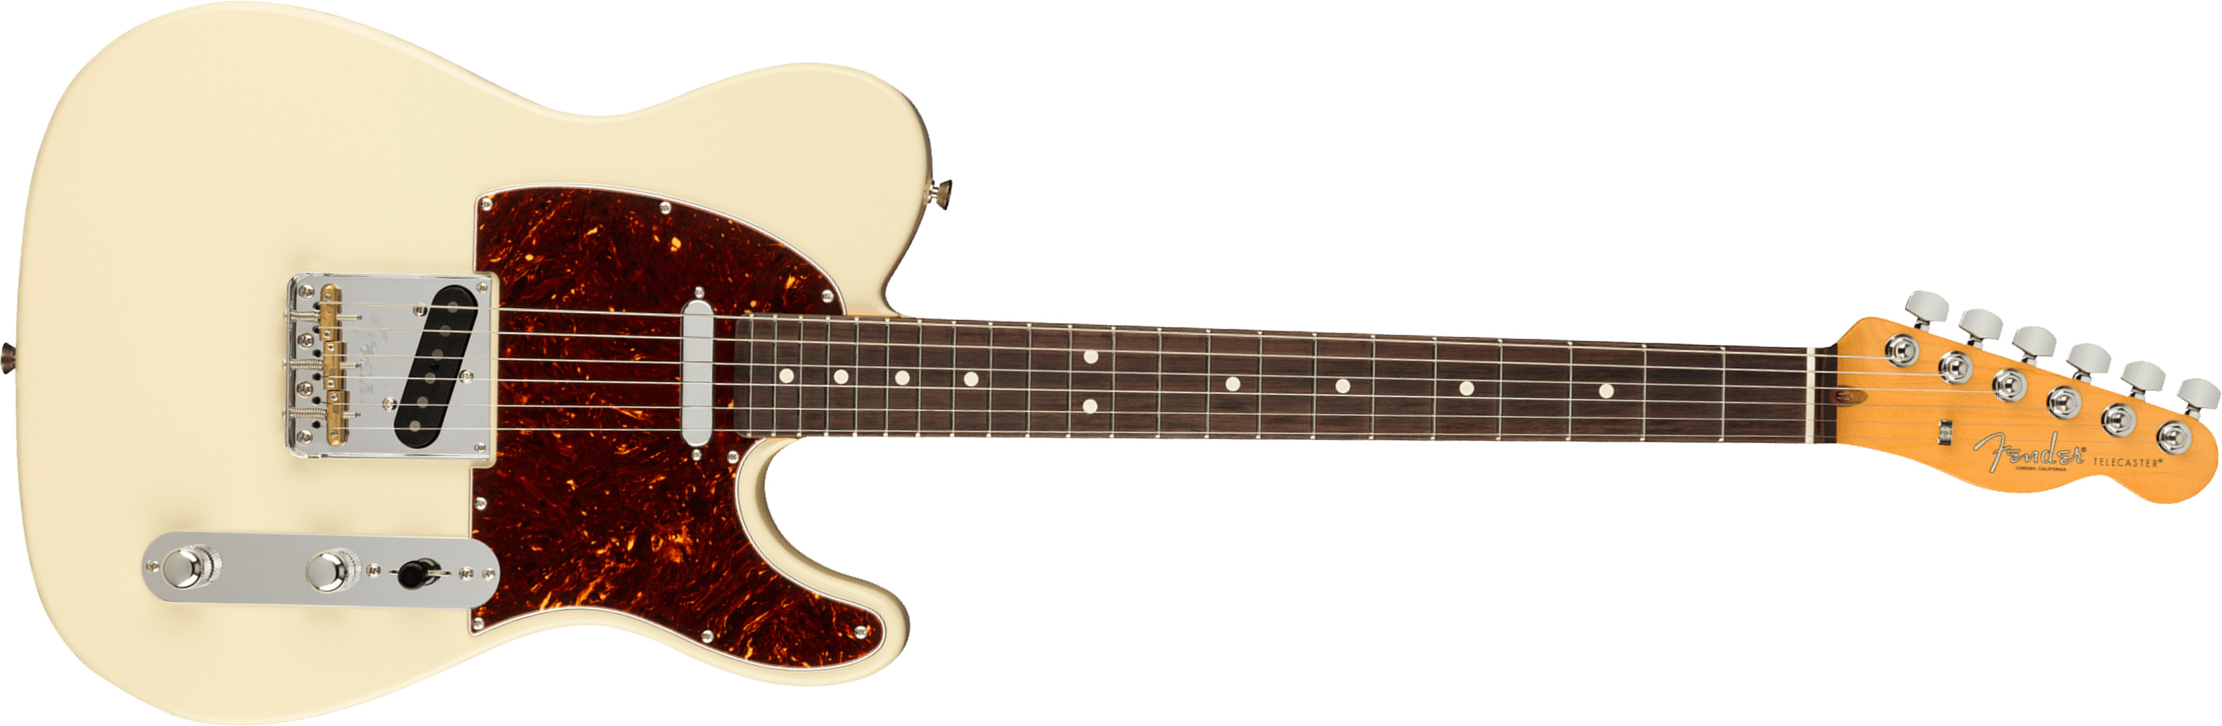 Fender Tele American Professional Ii Usa Rw - Olympic White - Guitarra eléctrica con forma de tel - Main picture